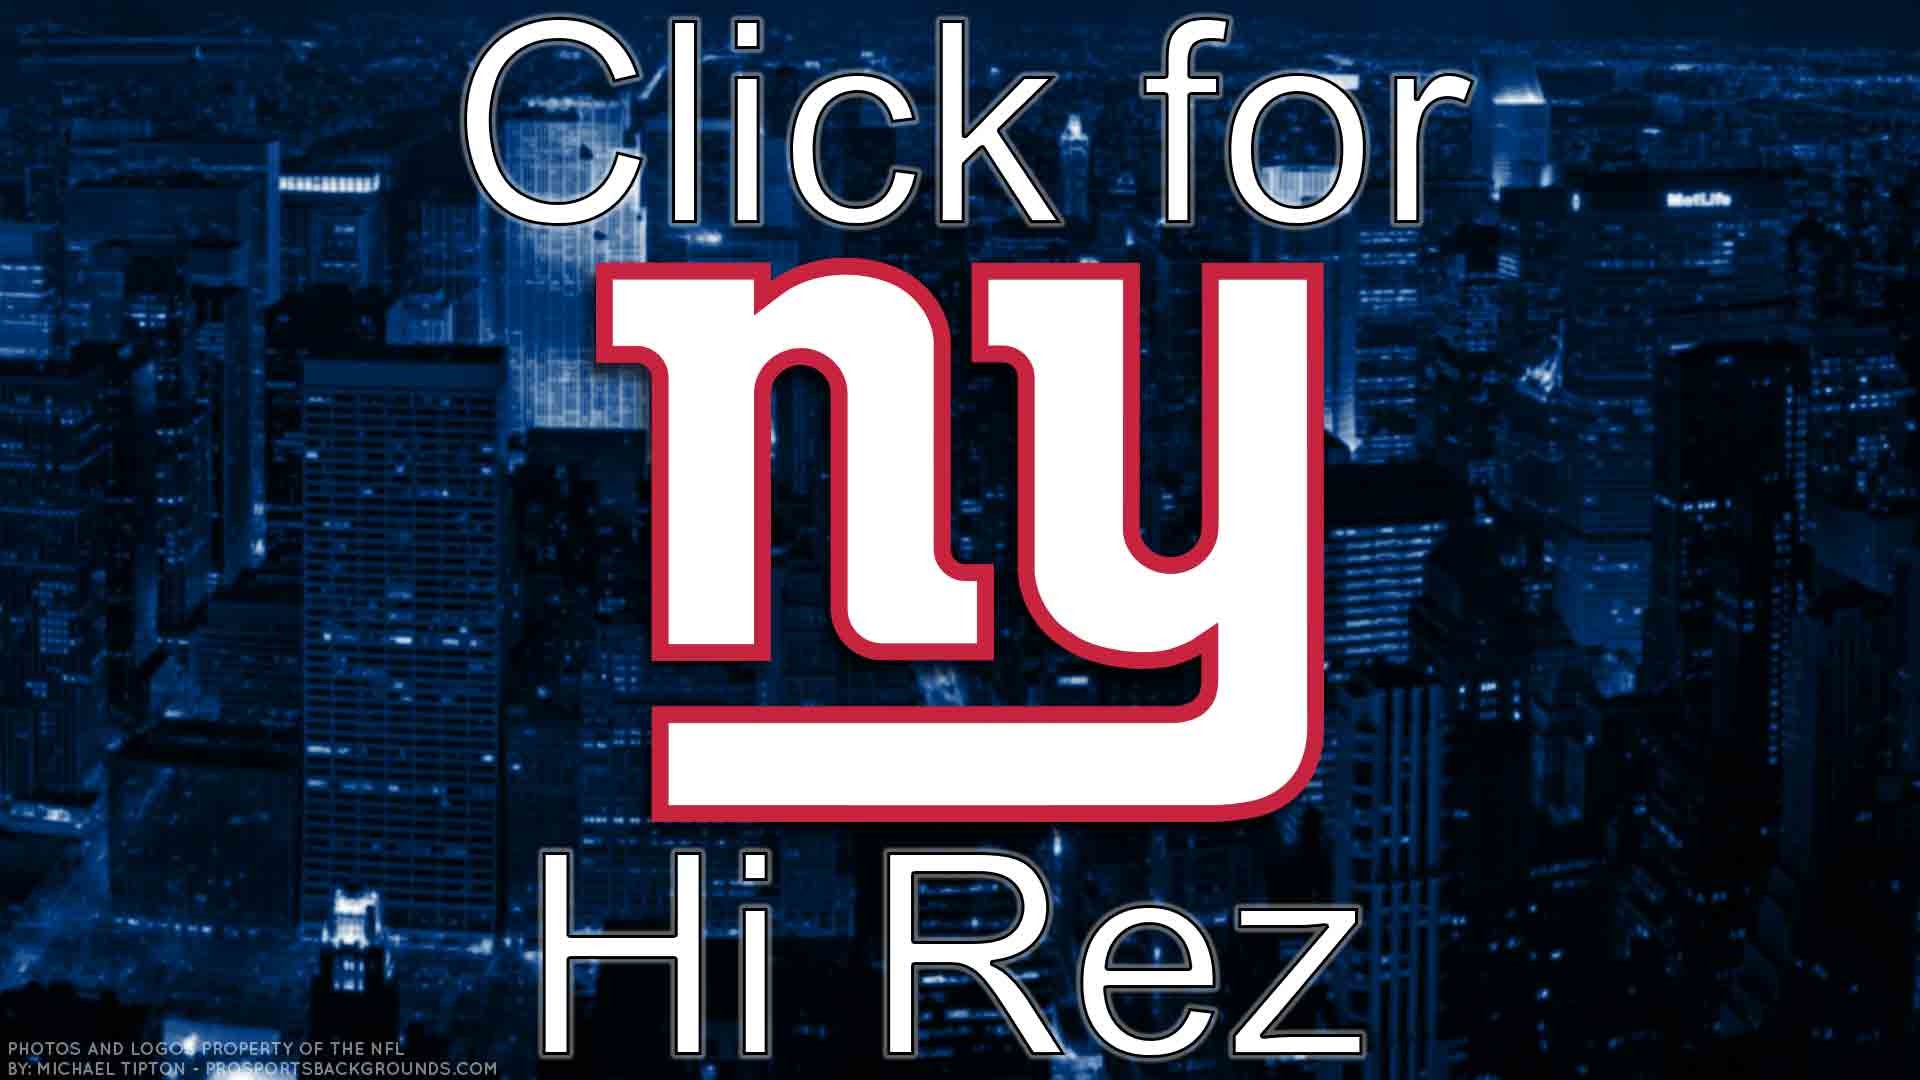 New York Giants 2017 football logo wallpaper pc desktop computer